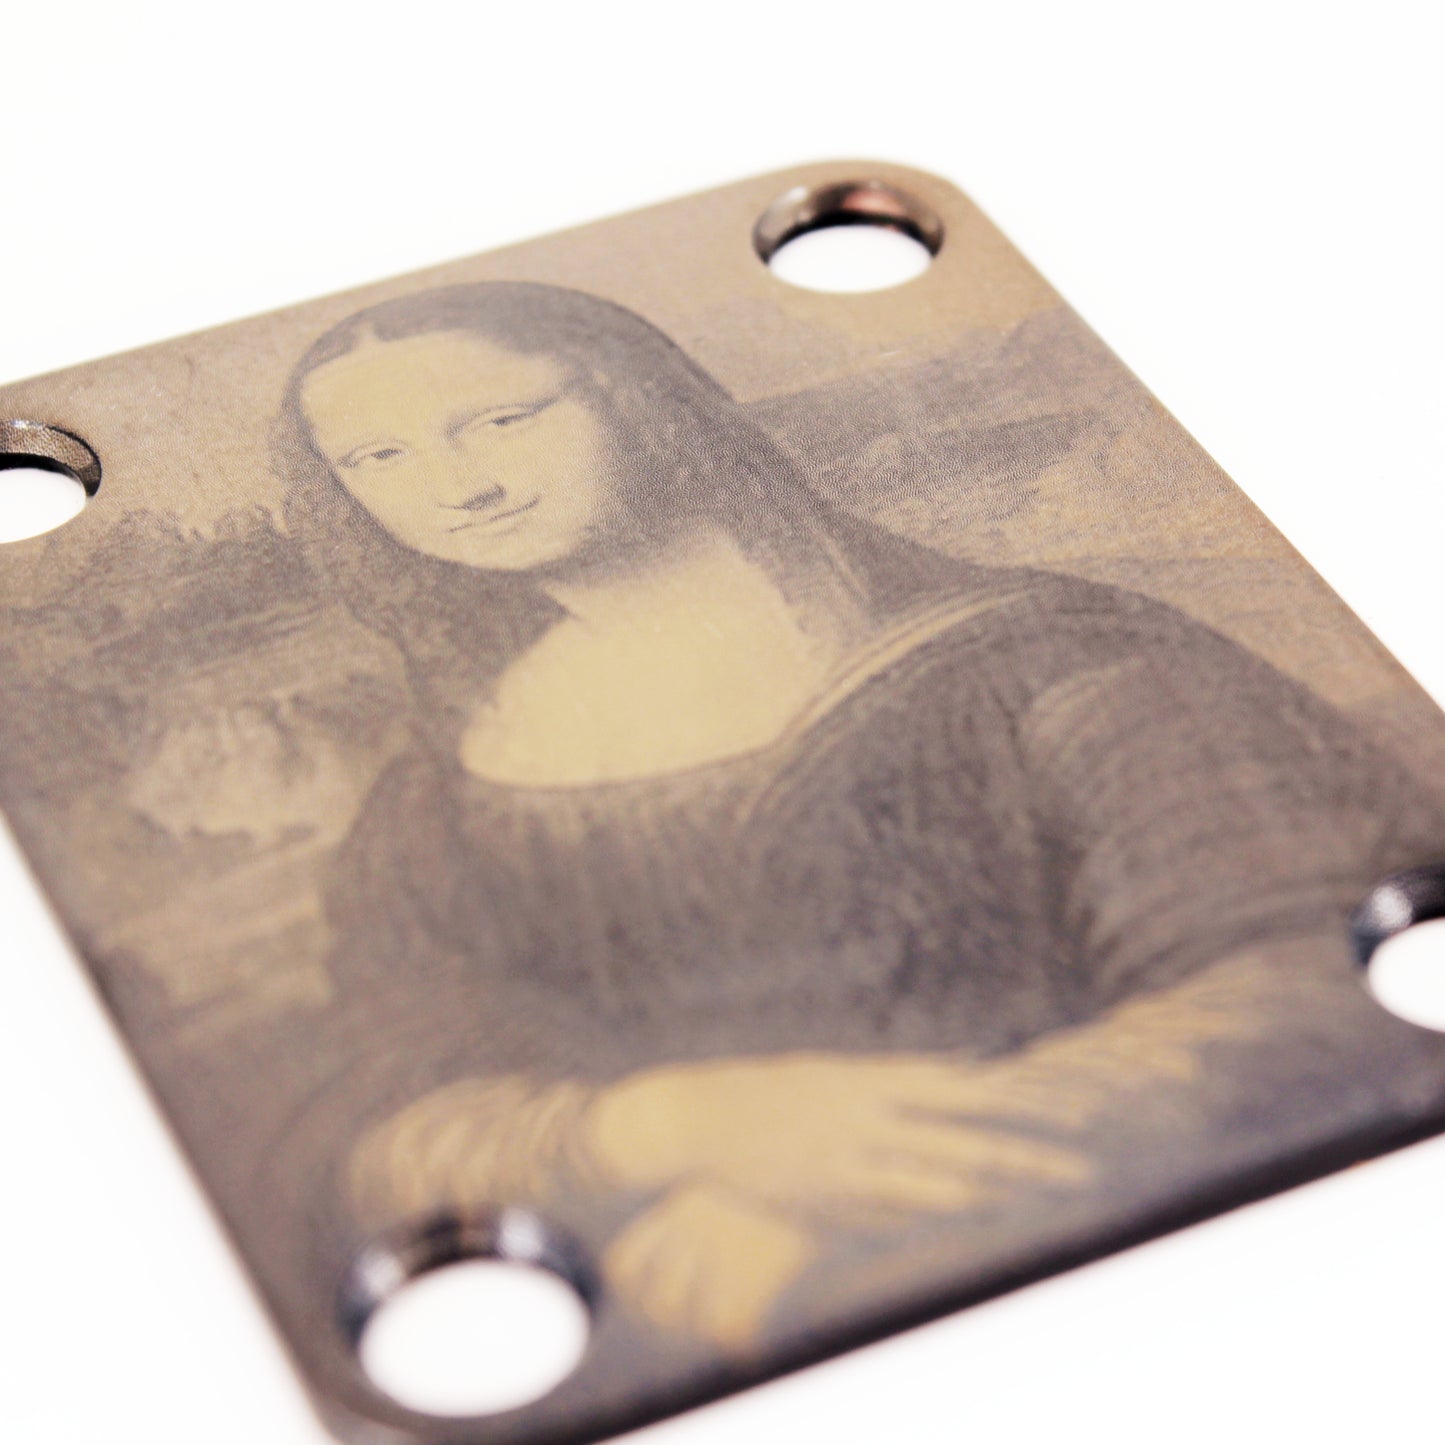 Guitar neck plate - Mona Lisa makes rock - La Joconde from Leonardo Da vinci - Fender size